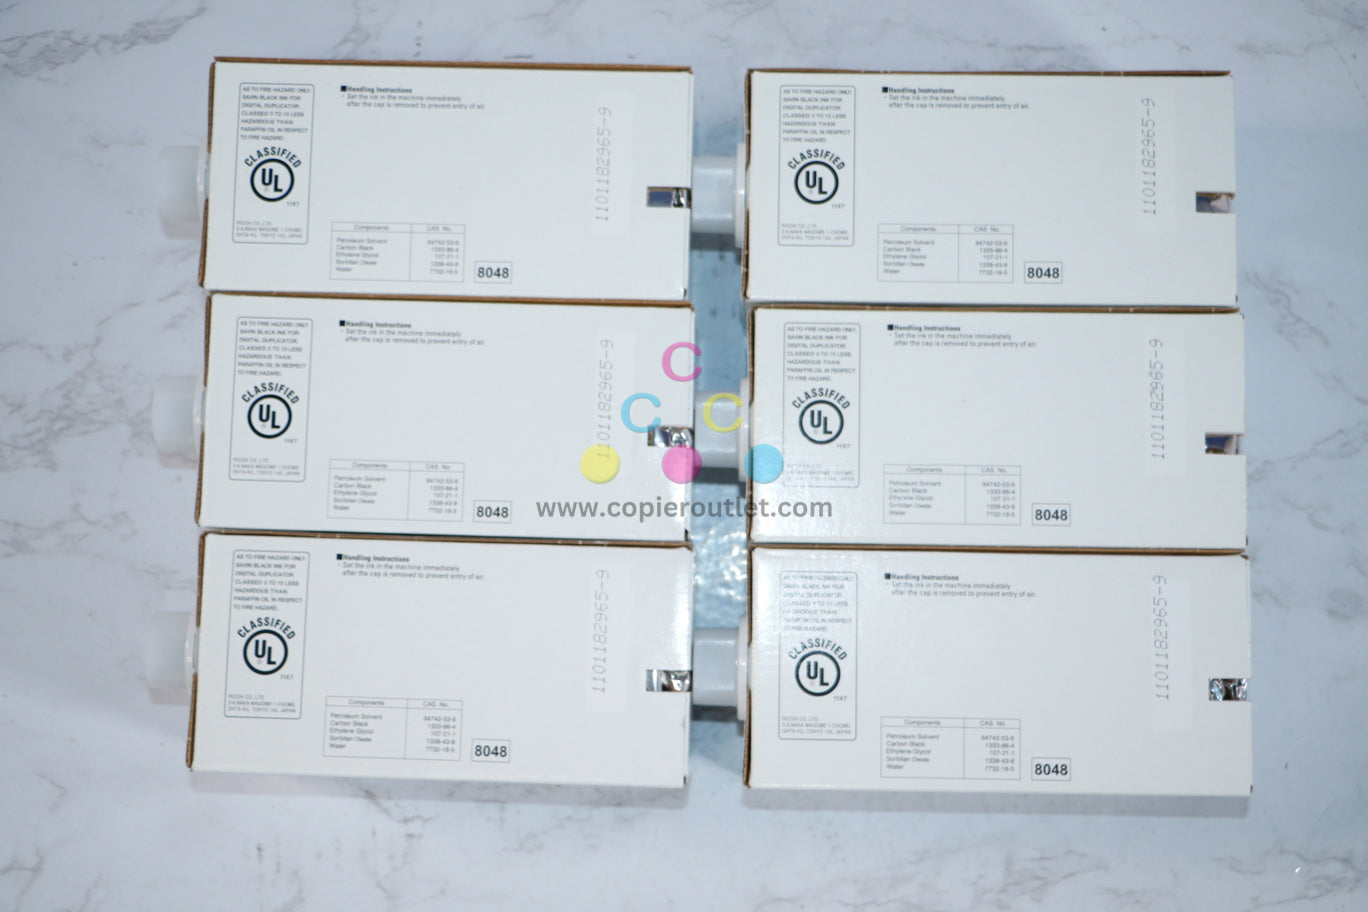 6 New OEM Savin 3350DNP,3360DNP Type 3360,  817157 (Product Code 4570) Black inks